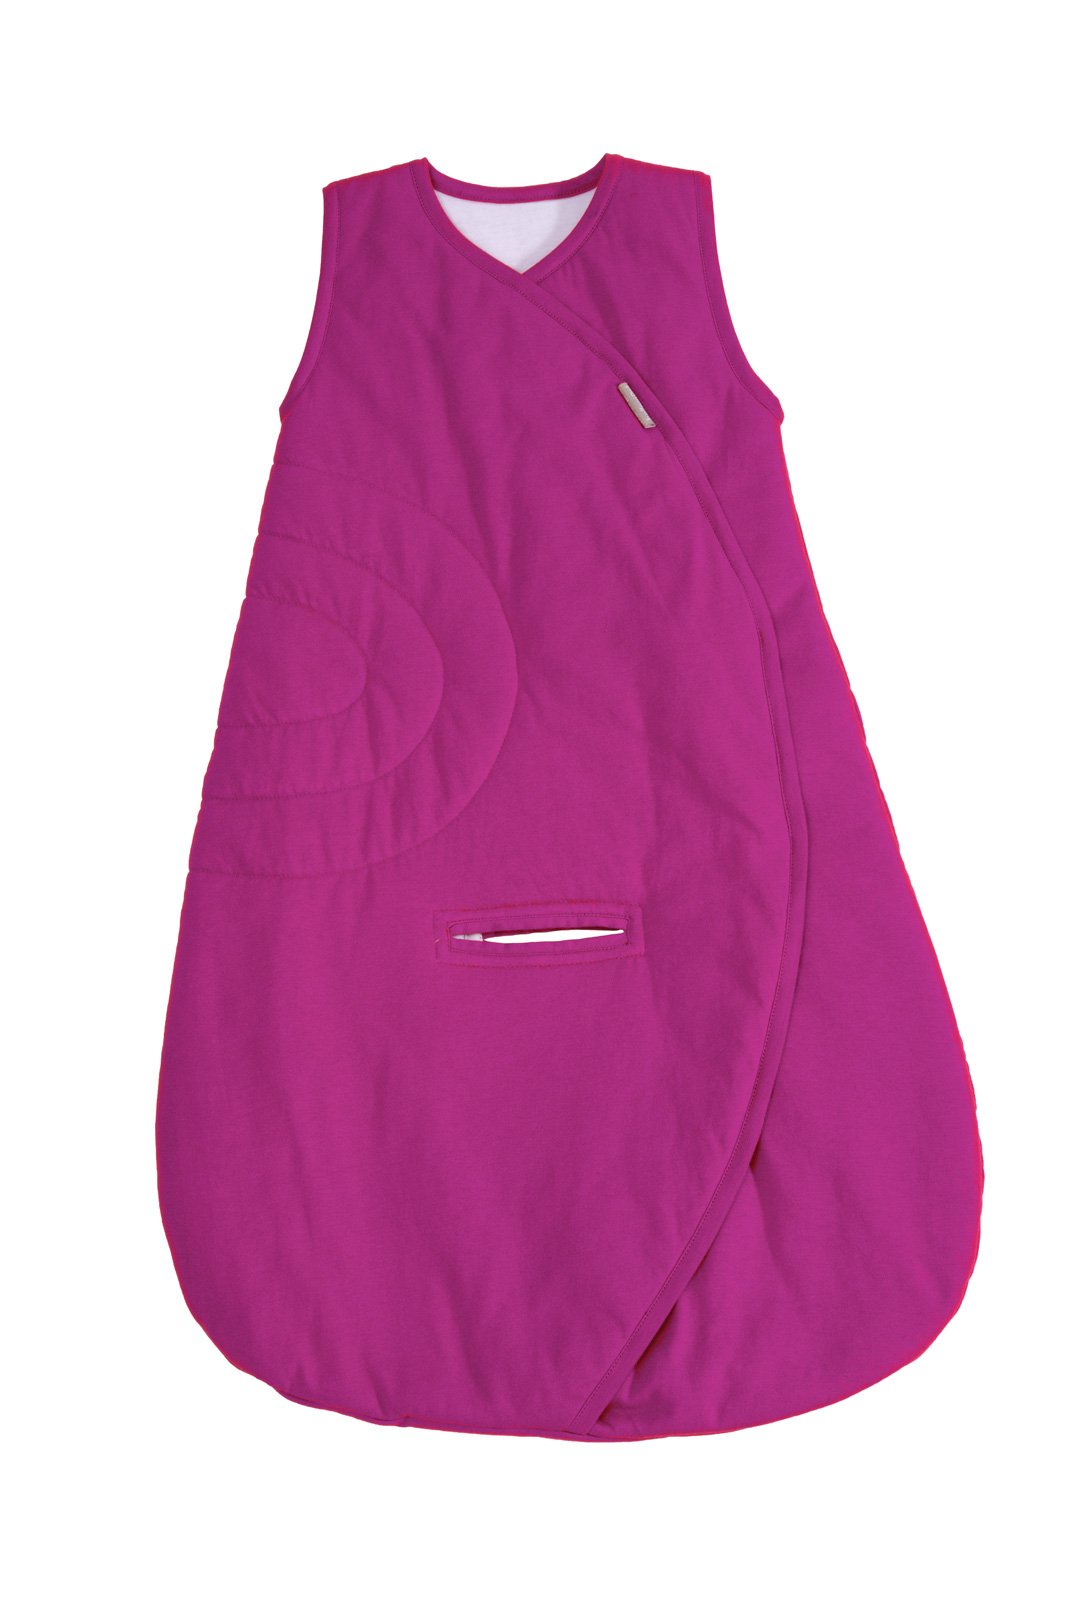 Bellemont Schlafsack Colorama 0-6 Monate 70 cm Jersey/Jersey Rosa Violett